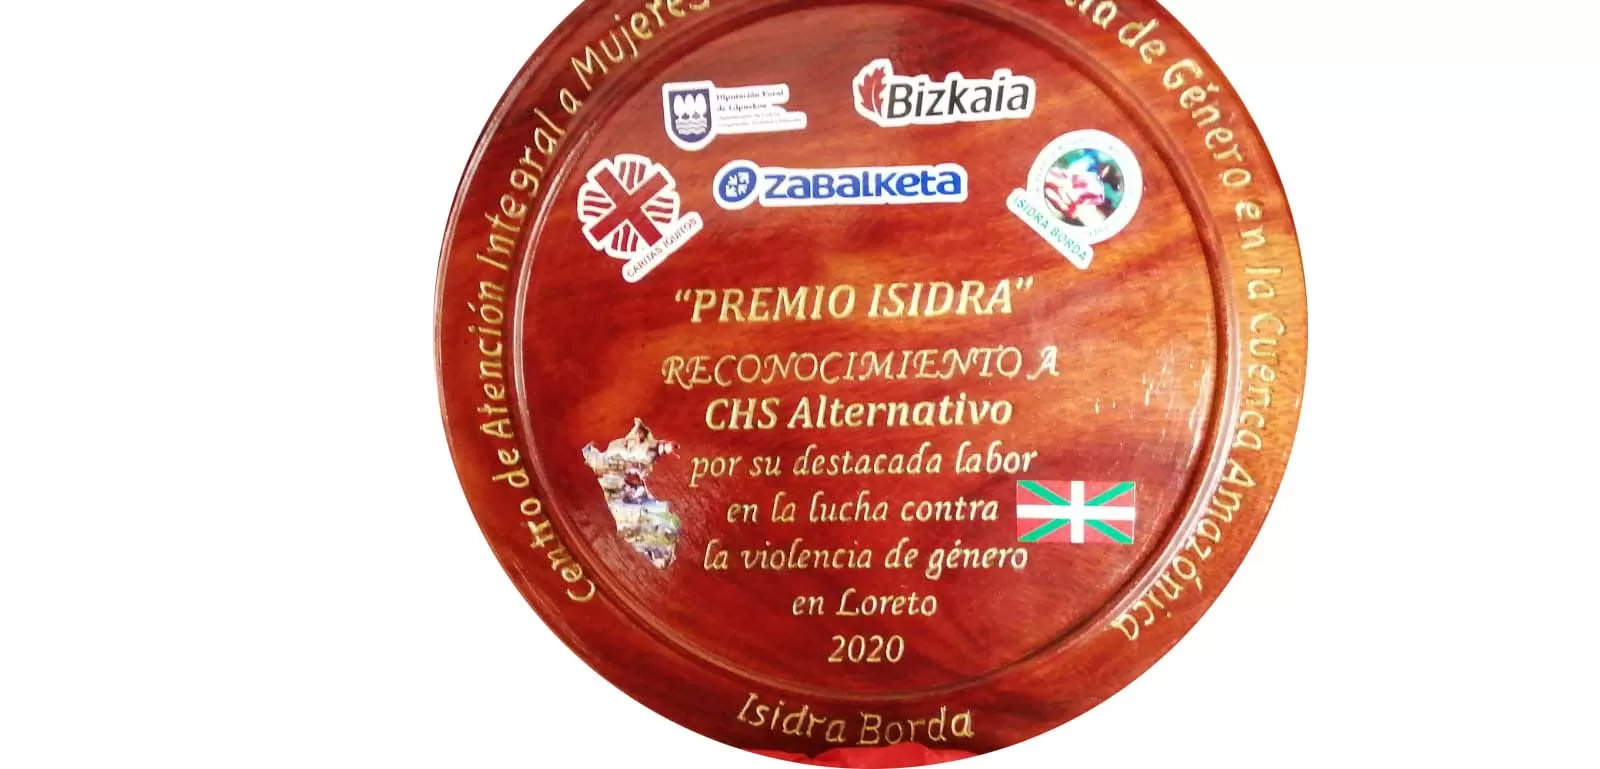 CHS Alternativo recibe Premio Isidra Borda